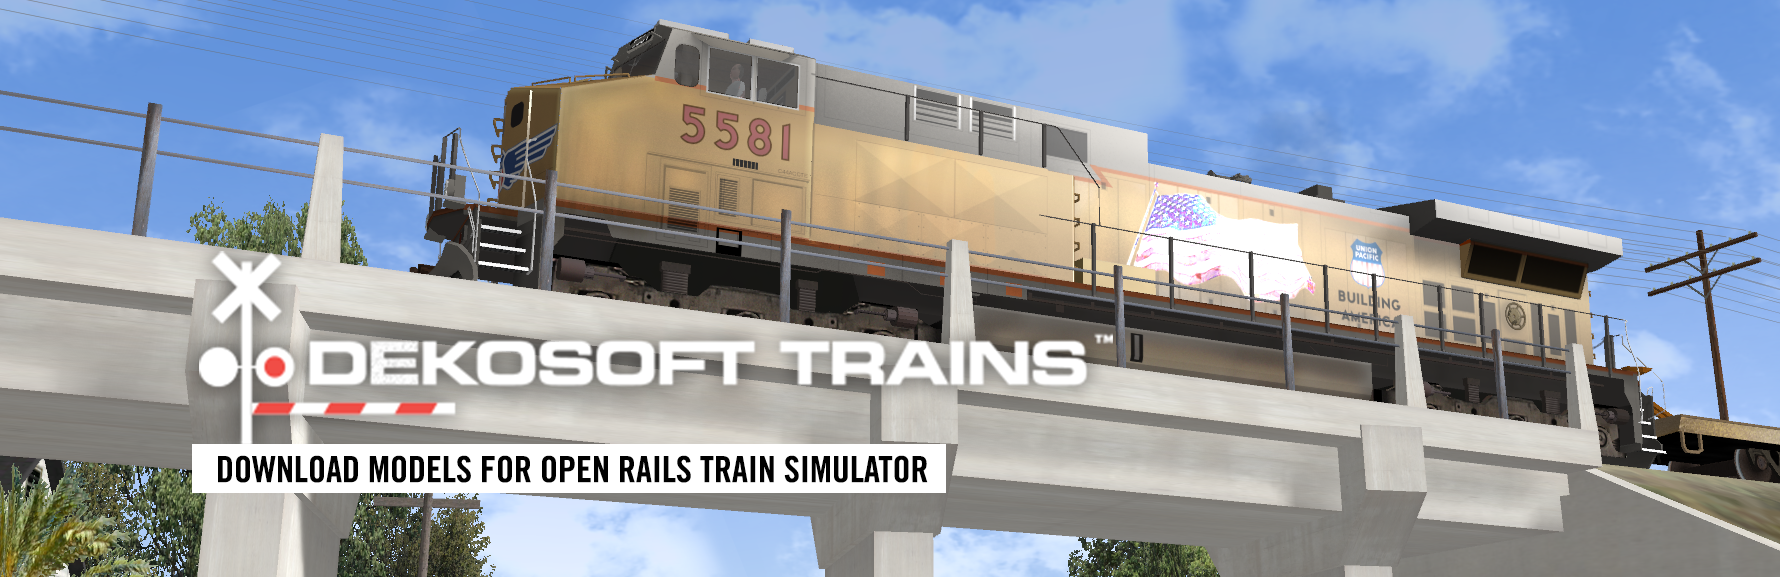 Dekosoft Trains: Download models for Open Rails Train Simulator